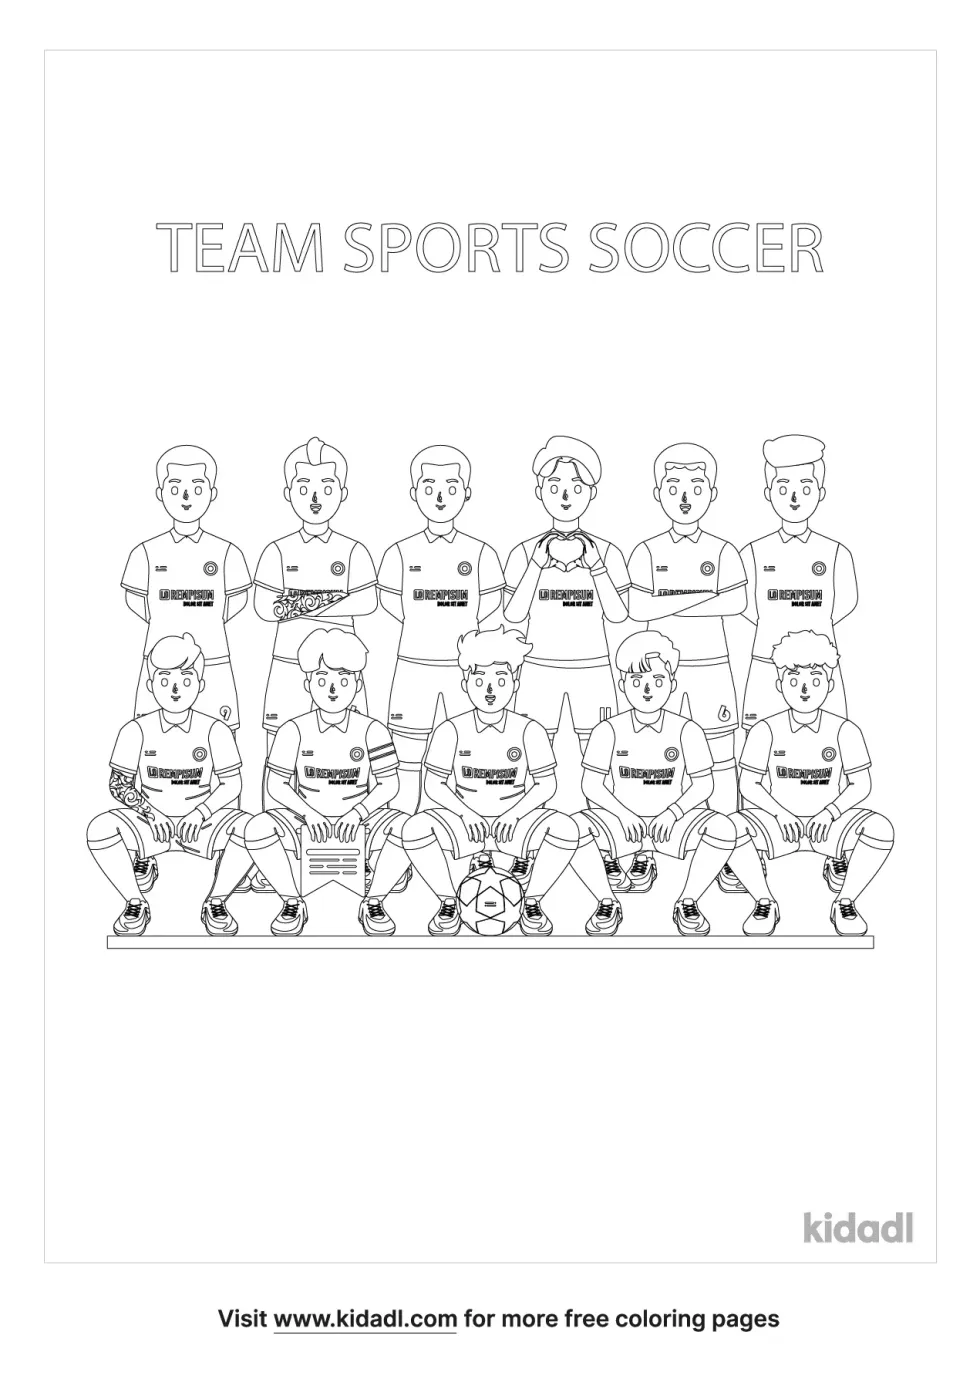 Team Sports Soccer